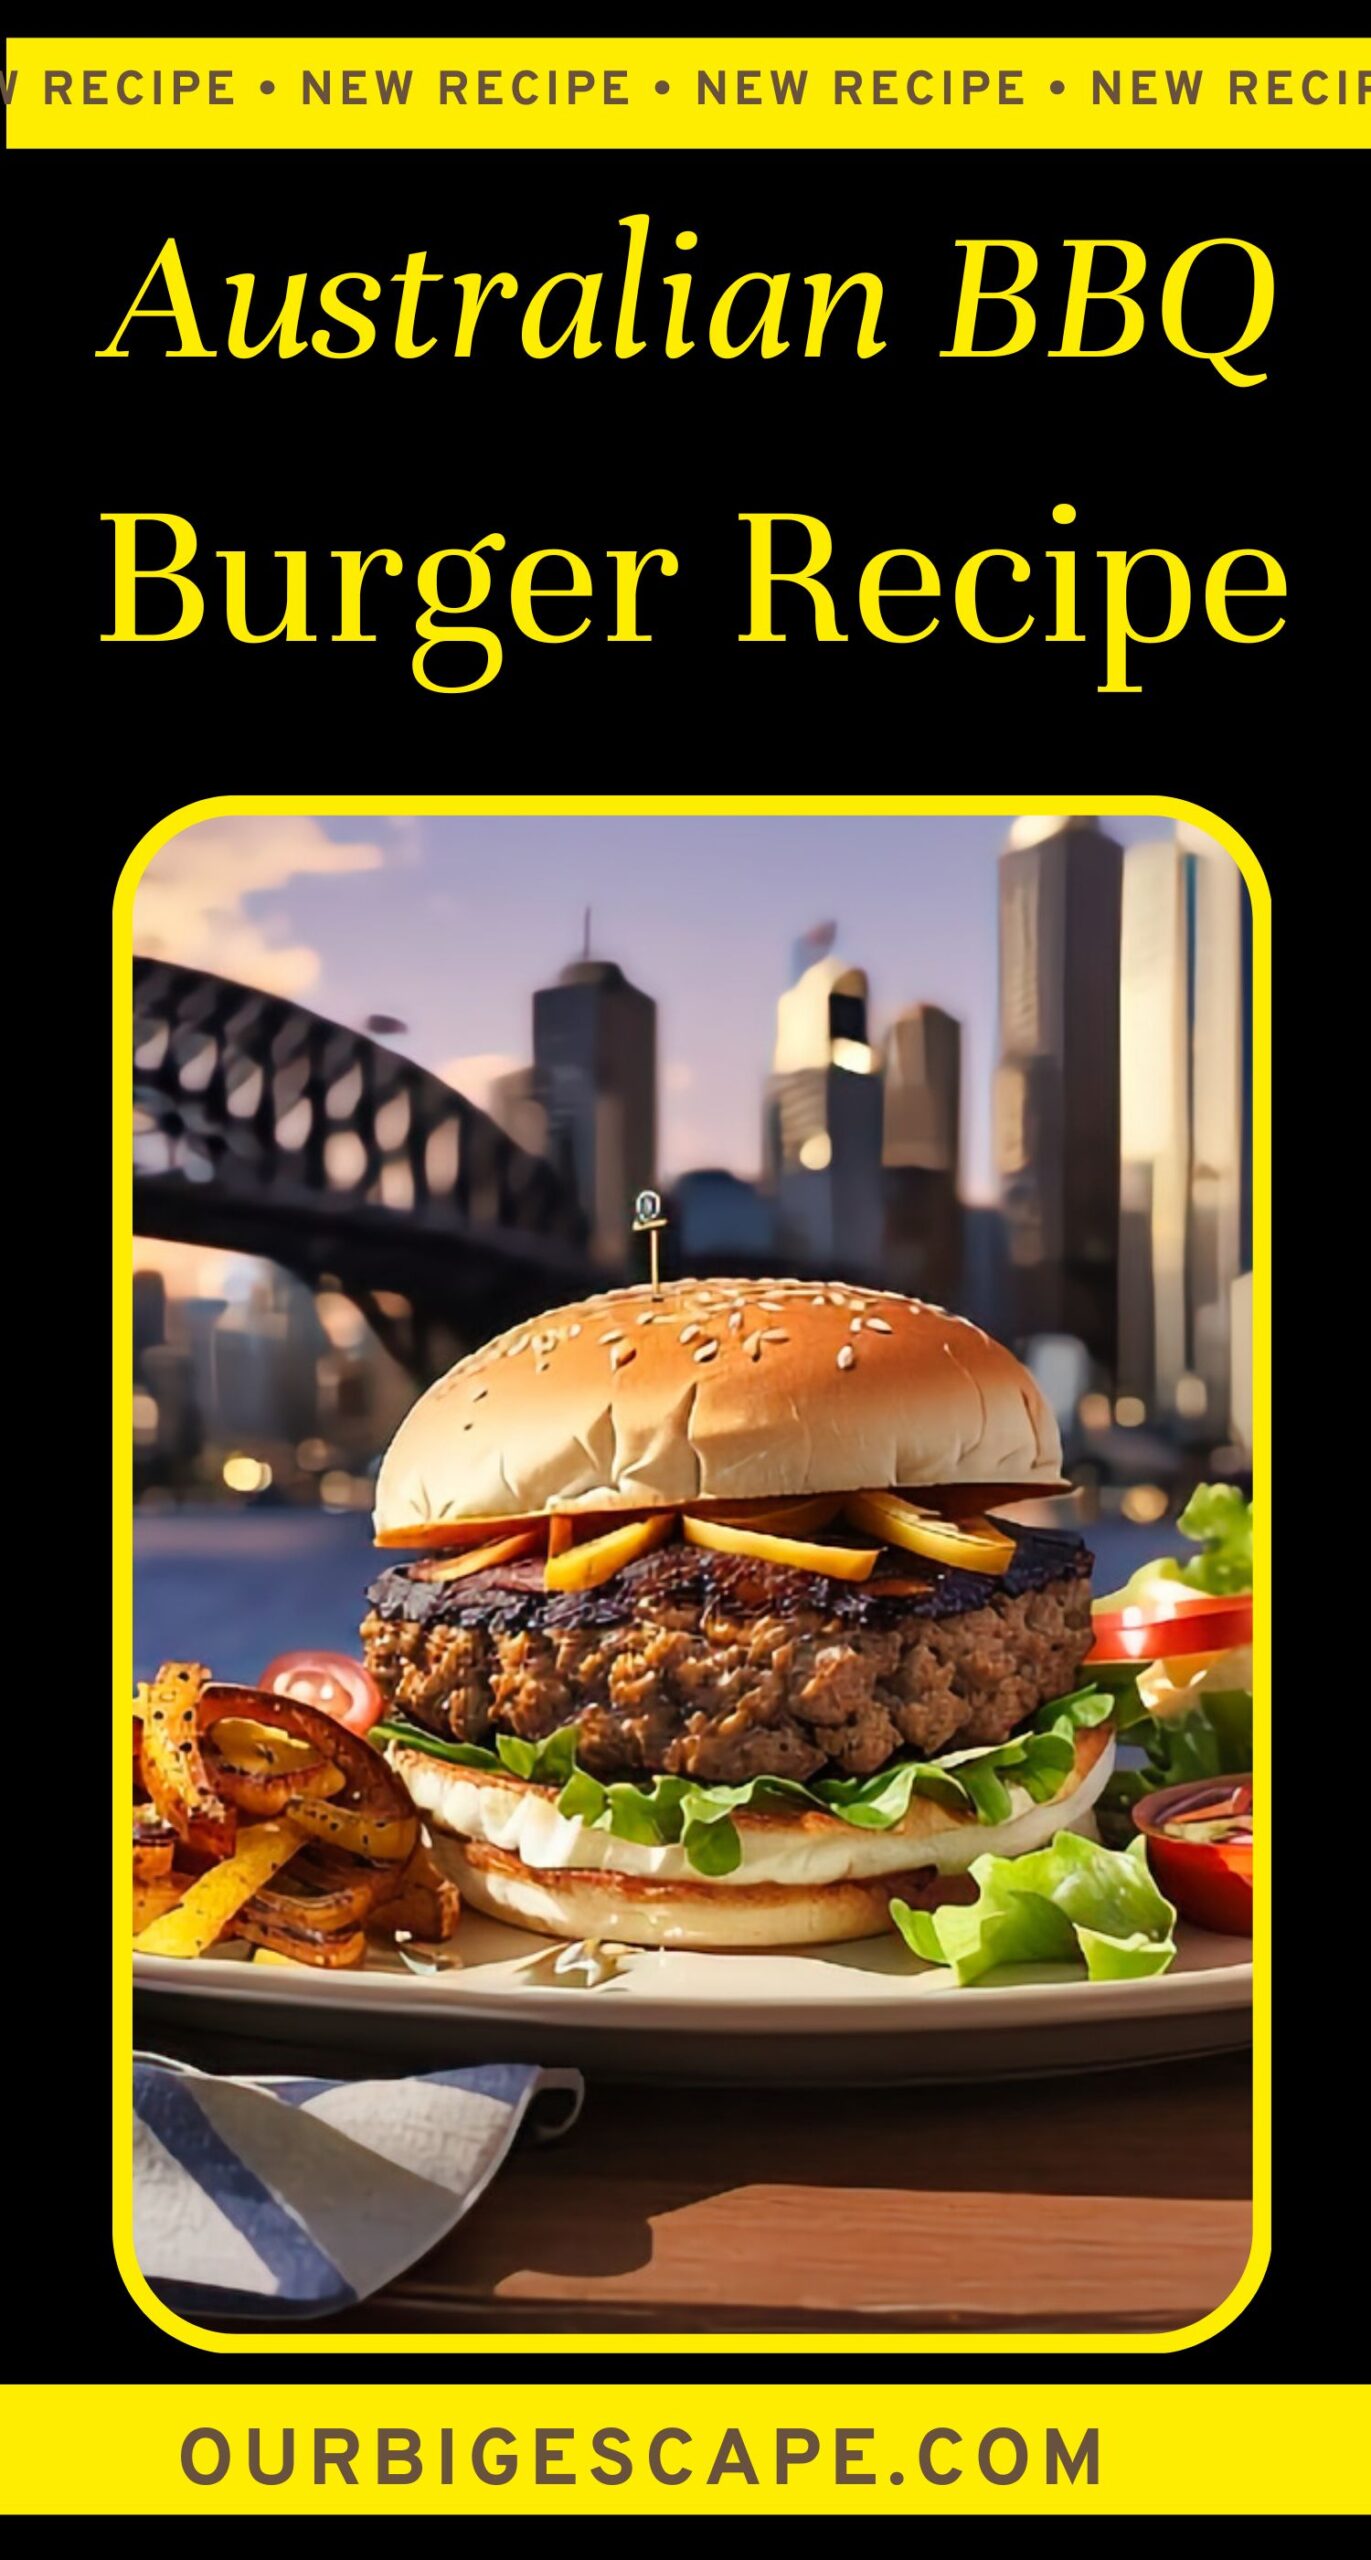 7. Australian BBQ Burger Recipe